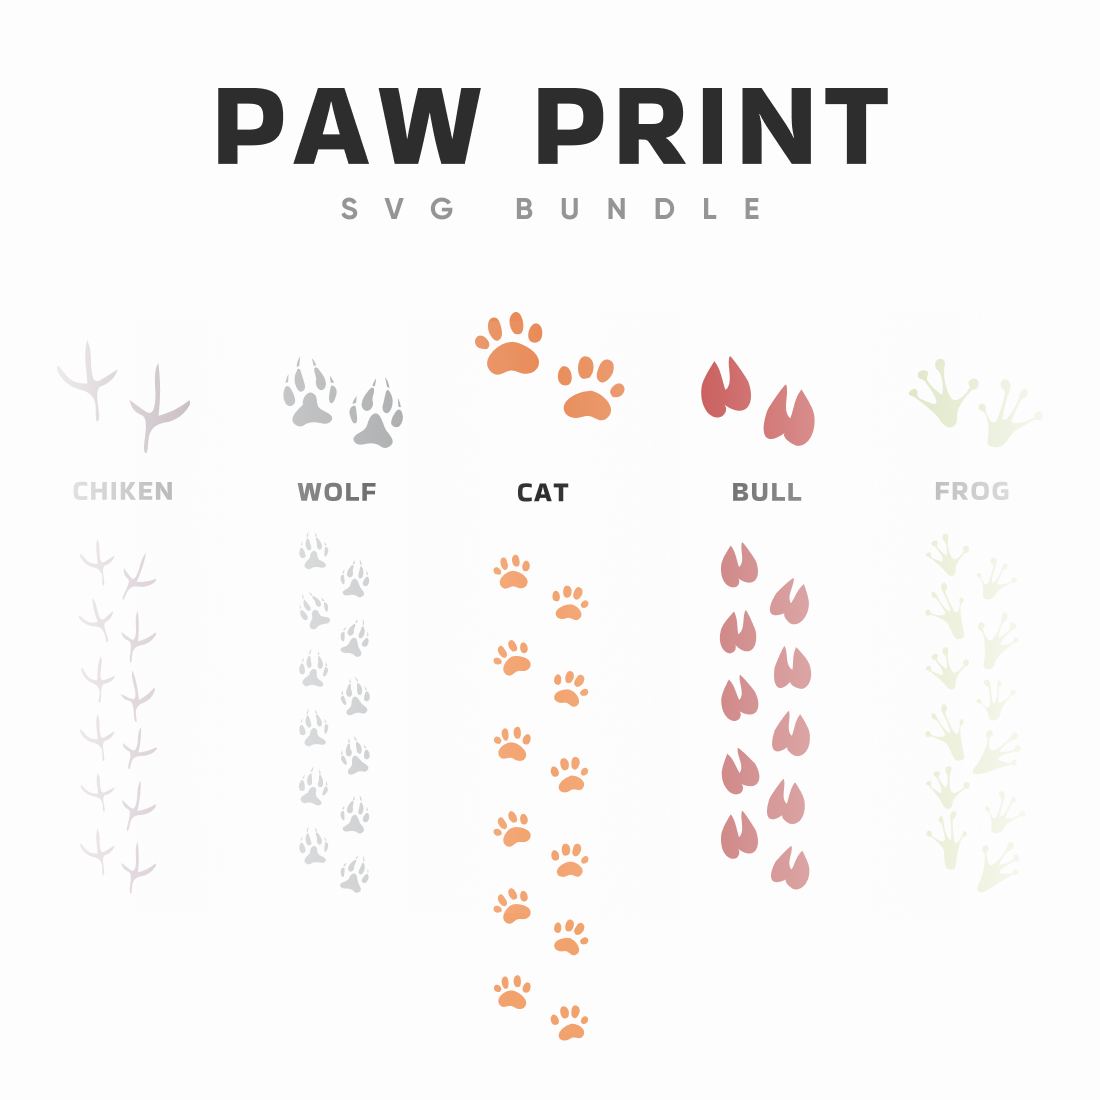 Dog Paw SVG: 10 Designs – MasterBundles